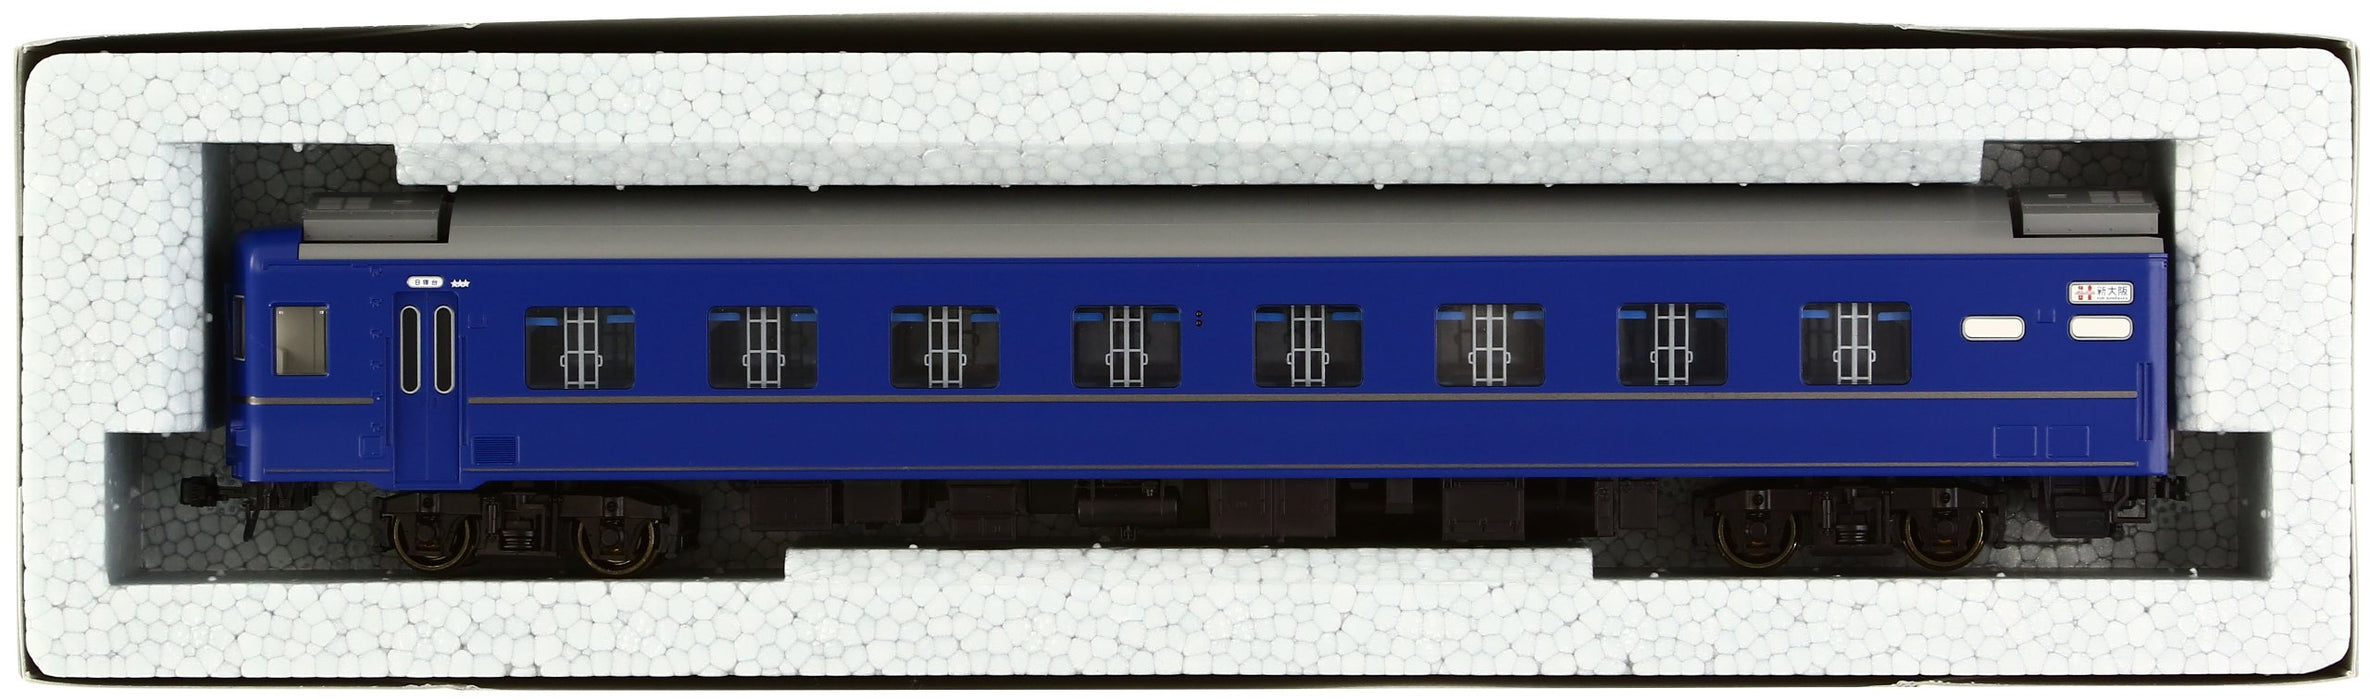 Kato Ho Gauge 25 0 1-541 Model Passenger Train Car by Kato Railways